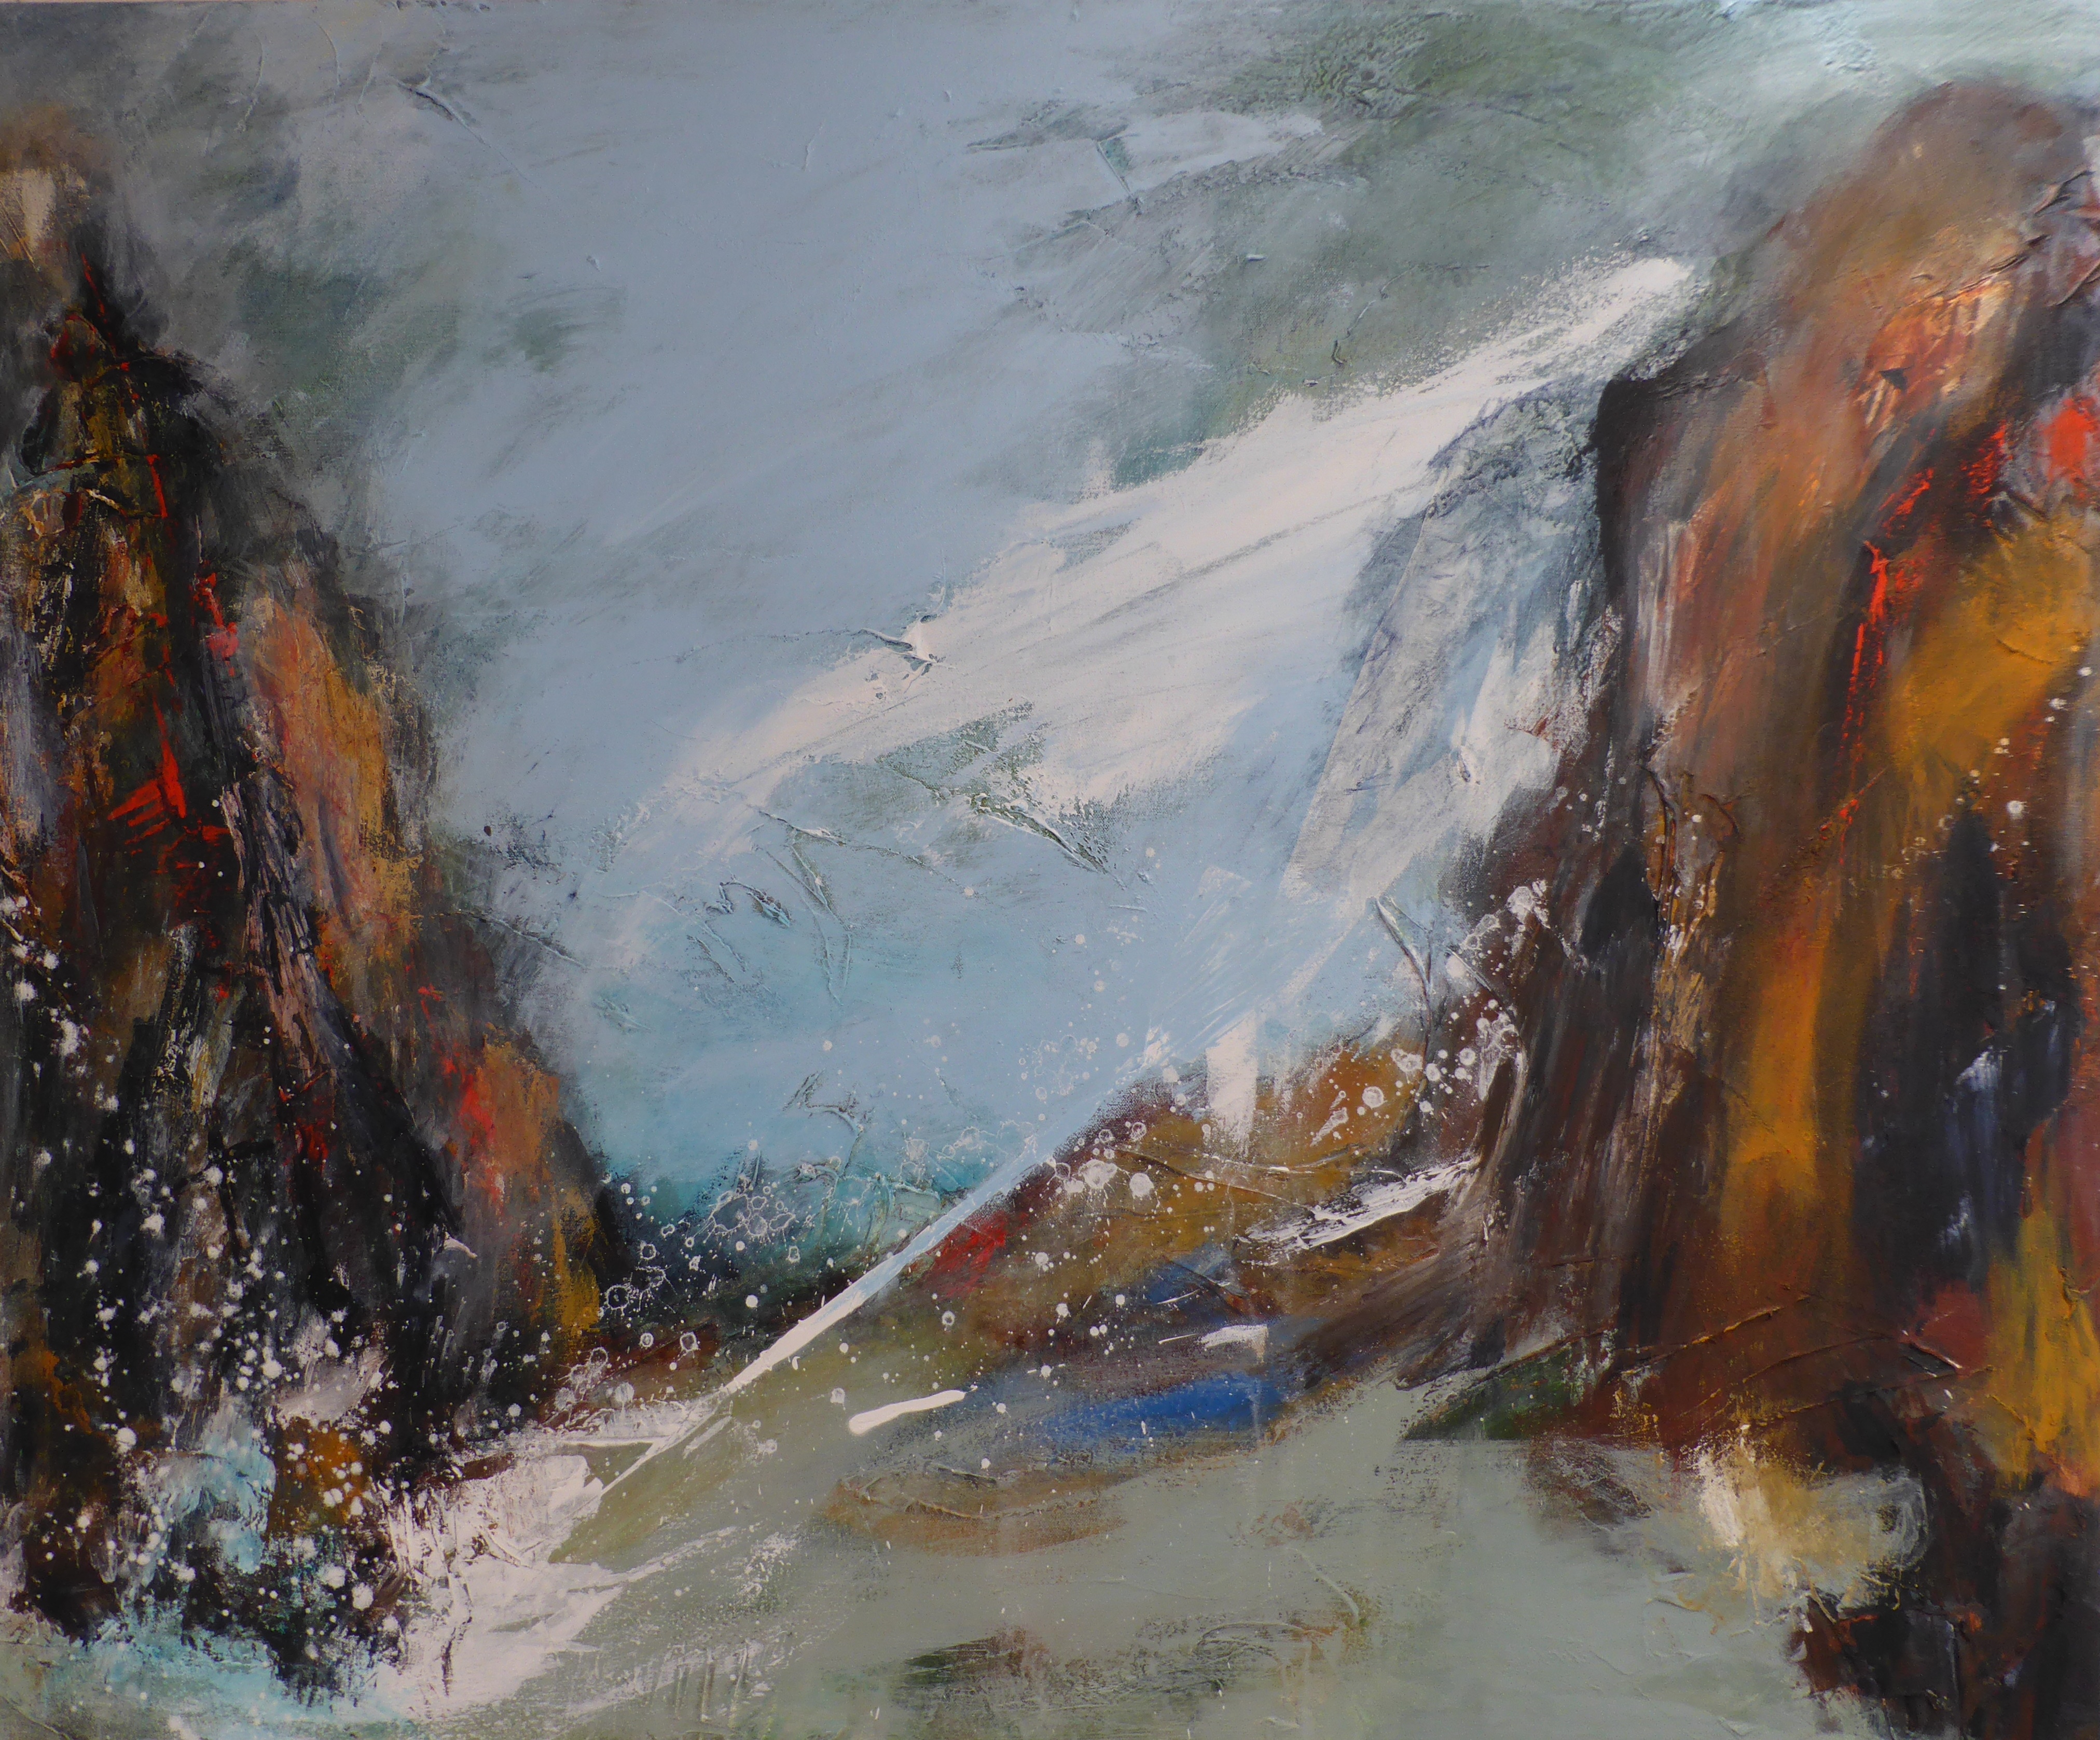 Stormy Porthgwarra - Penwith, Mixed Media on Canvas, 100 x 120cm